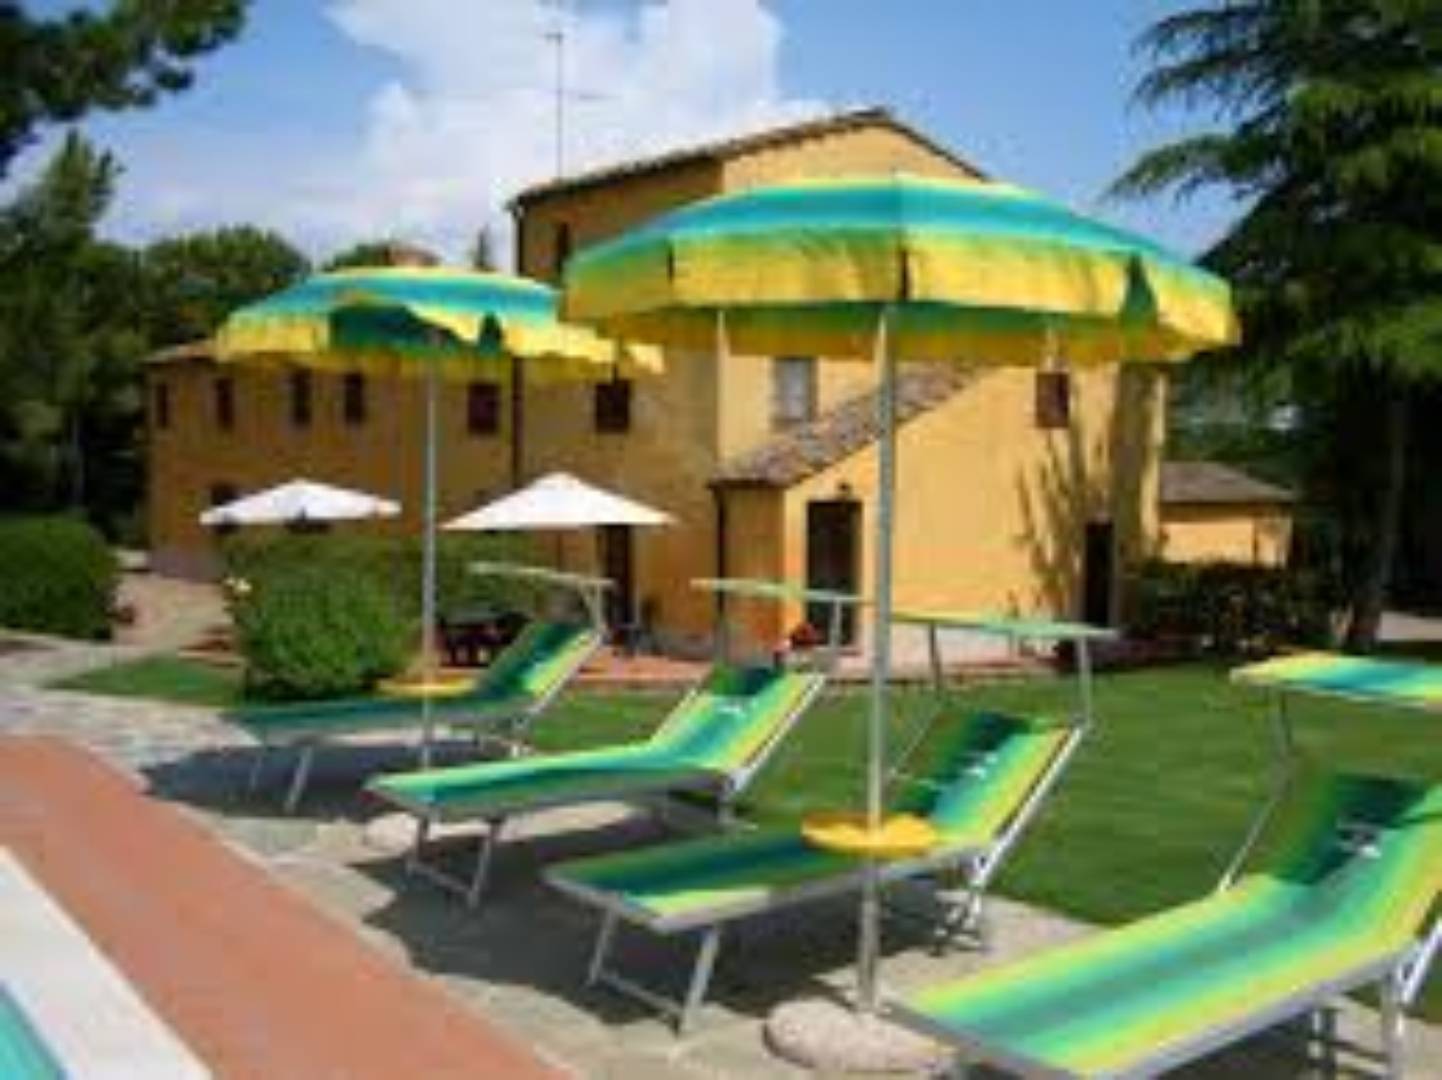 San Gimignano Vacation Rental